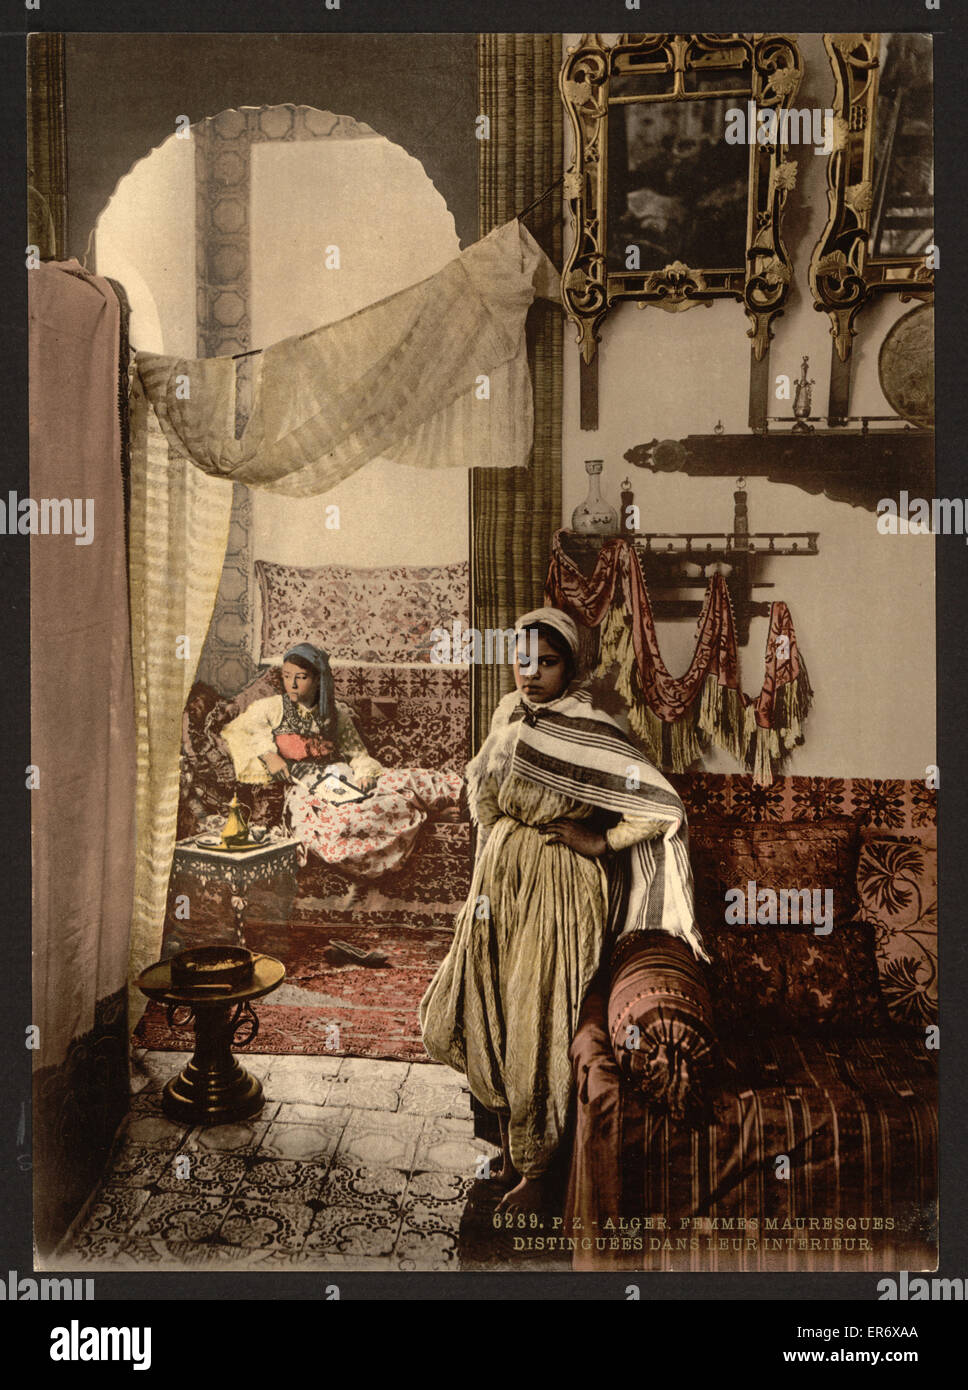 Les femmes mauresques distingués, Alger, Algérie. Date ca. 1899. Banque D'Images